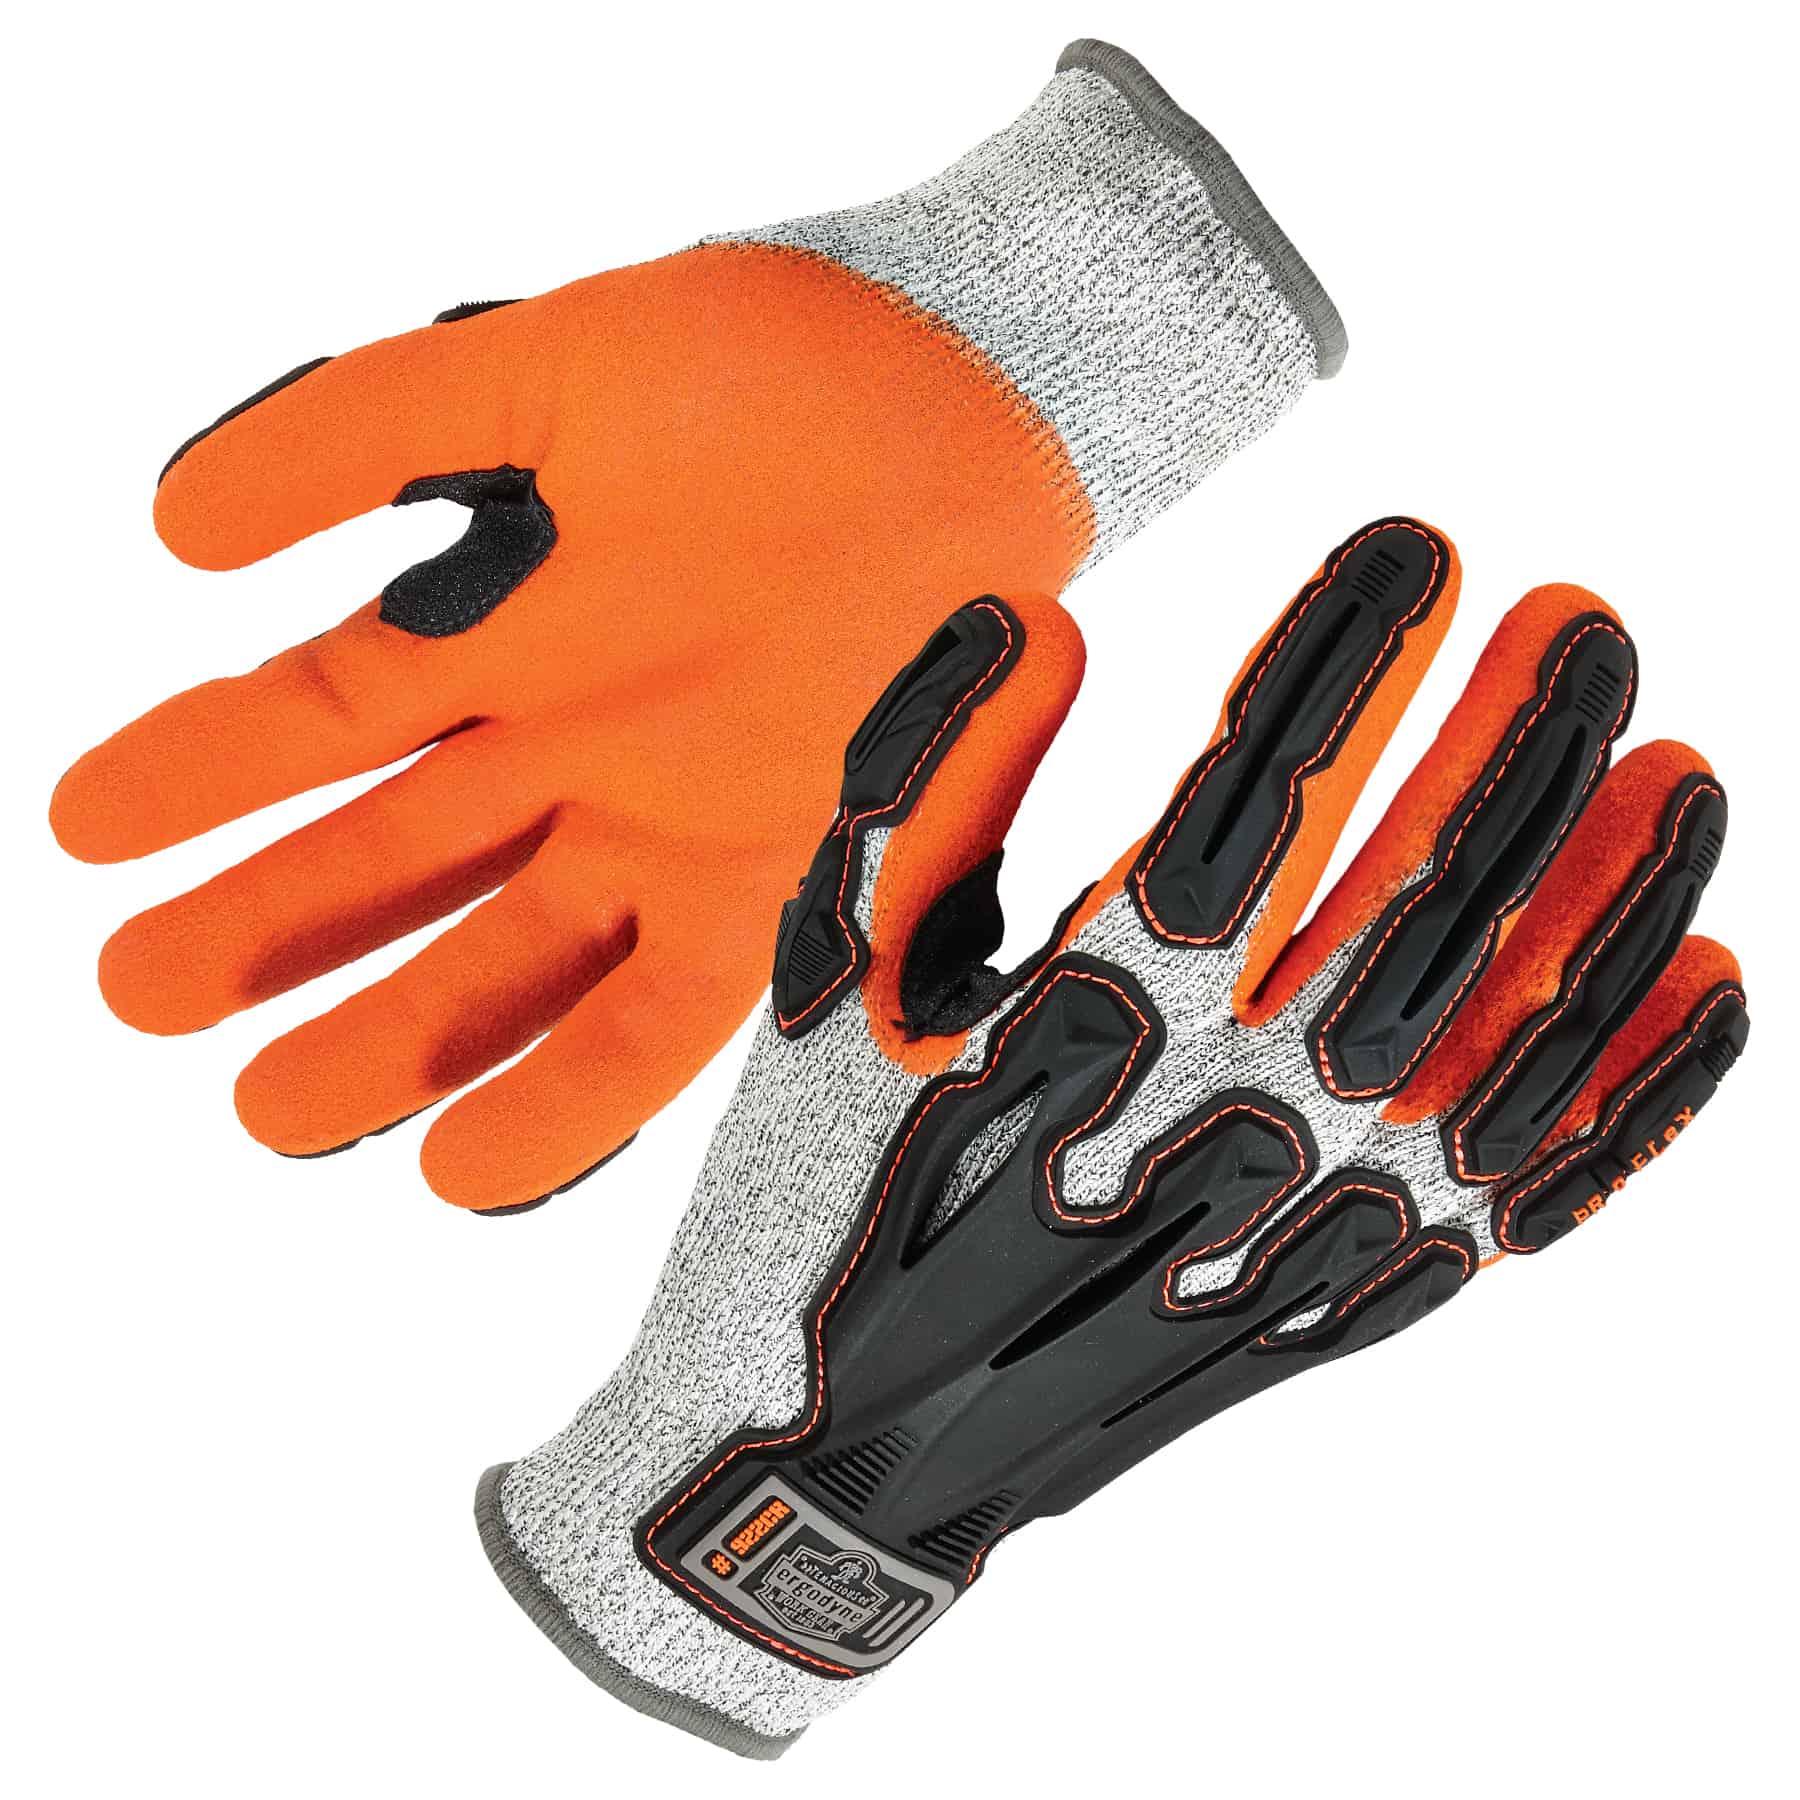 https://www.ergodyne.com/sites/default/files/product-images/17092-922cr-cut-resistant-nitrile-dipped-dir-gloves-paired_1.jpg